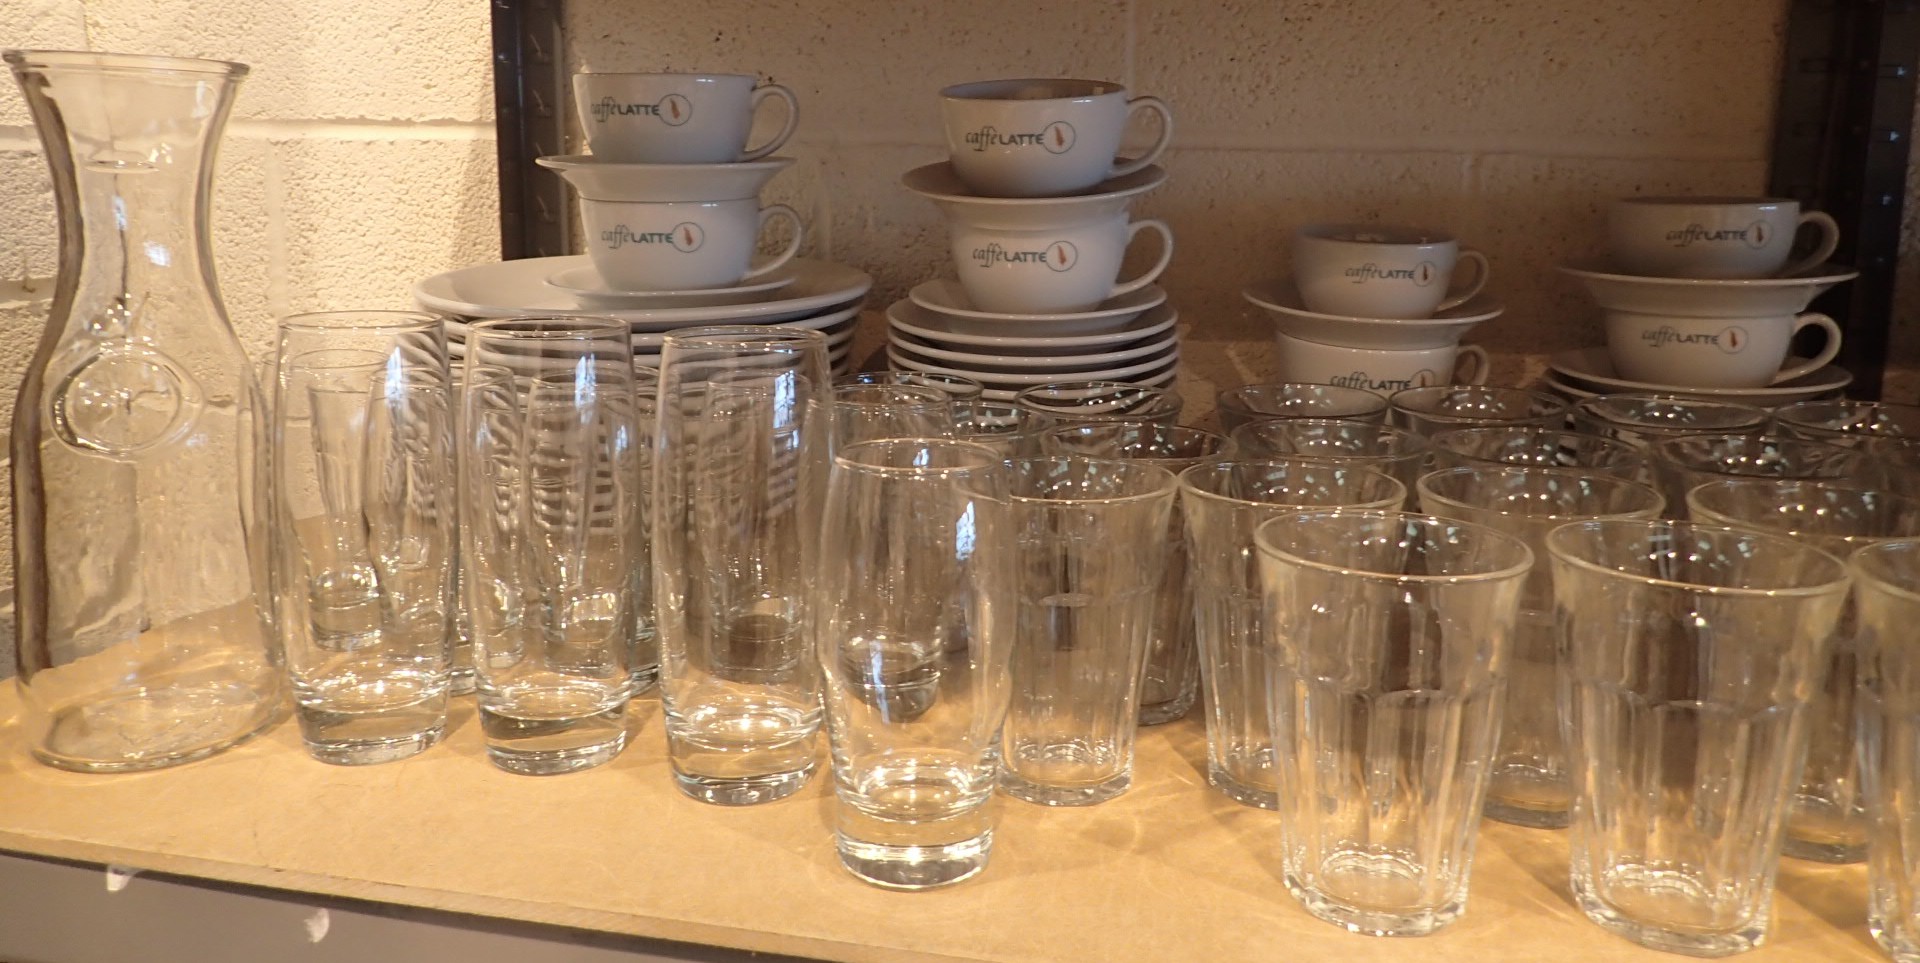 Two shelves of caffelatte cup saucers plates glasses and kilner jars - Image 3 of 5